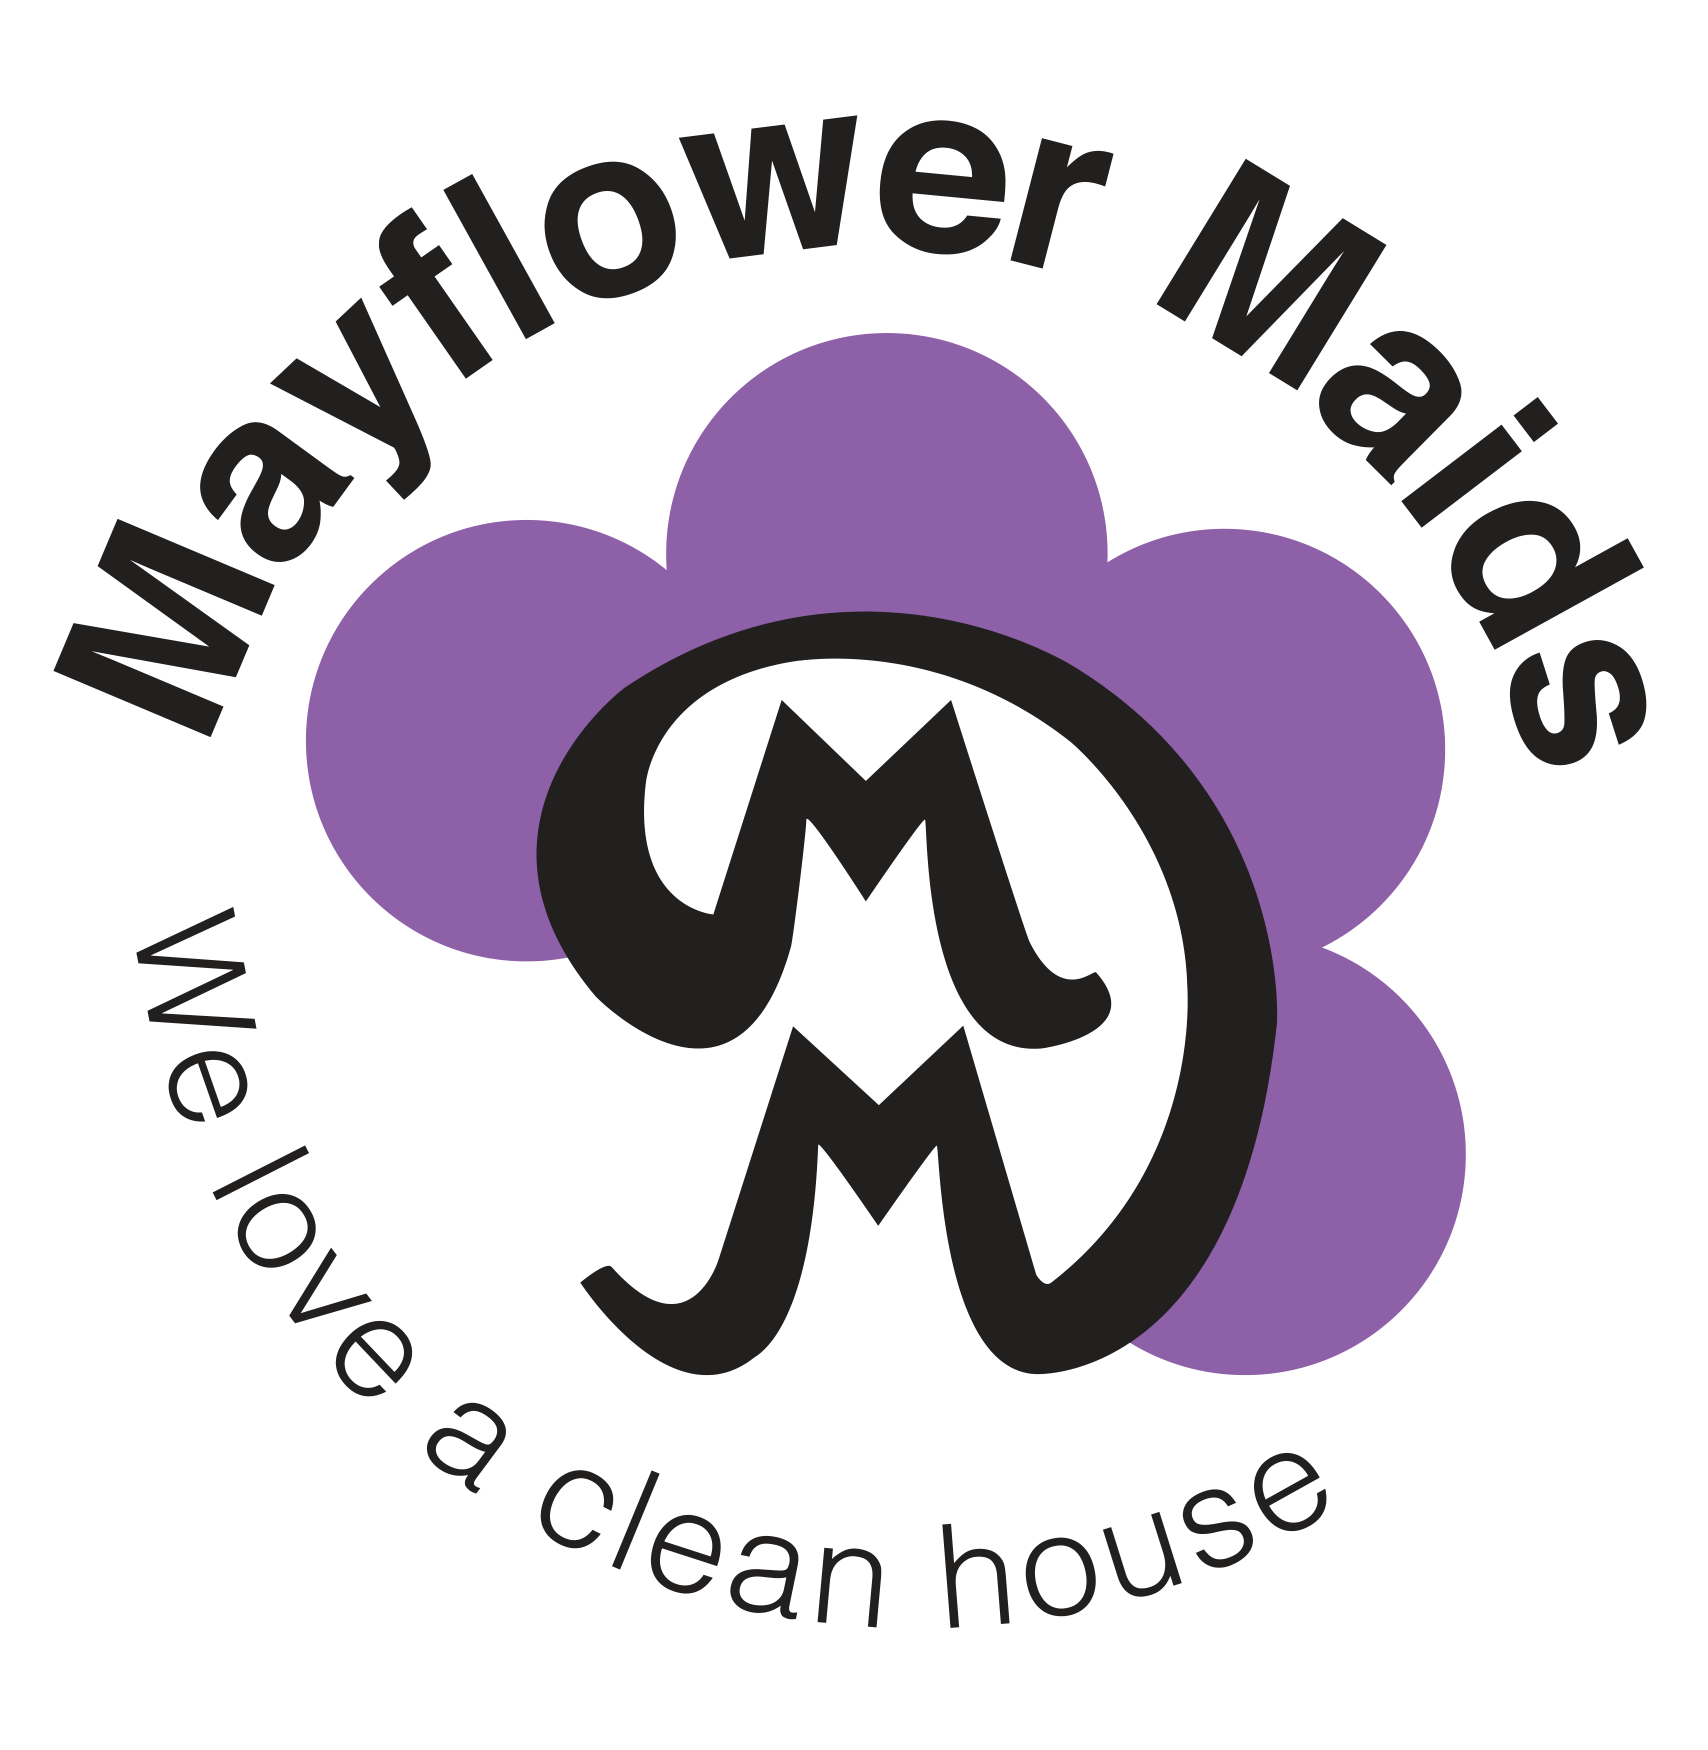 Mayflower maids